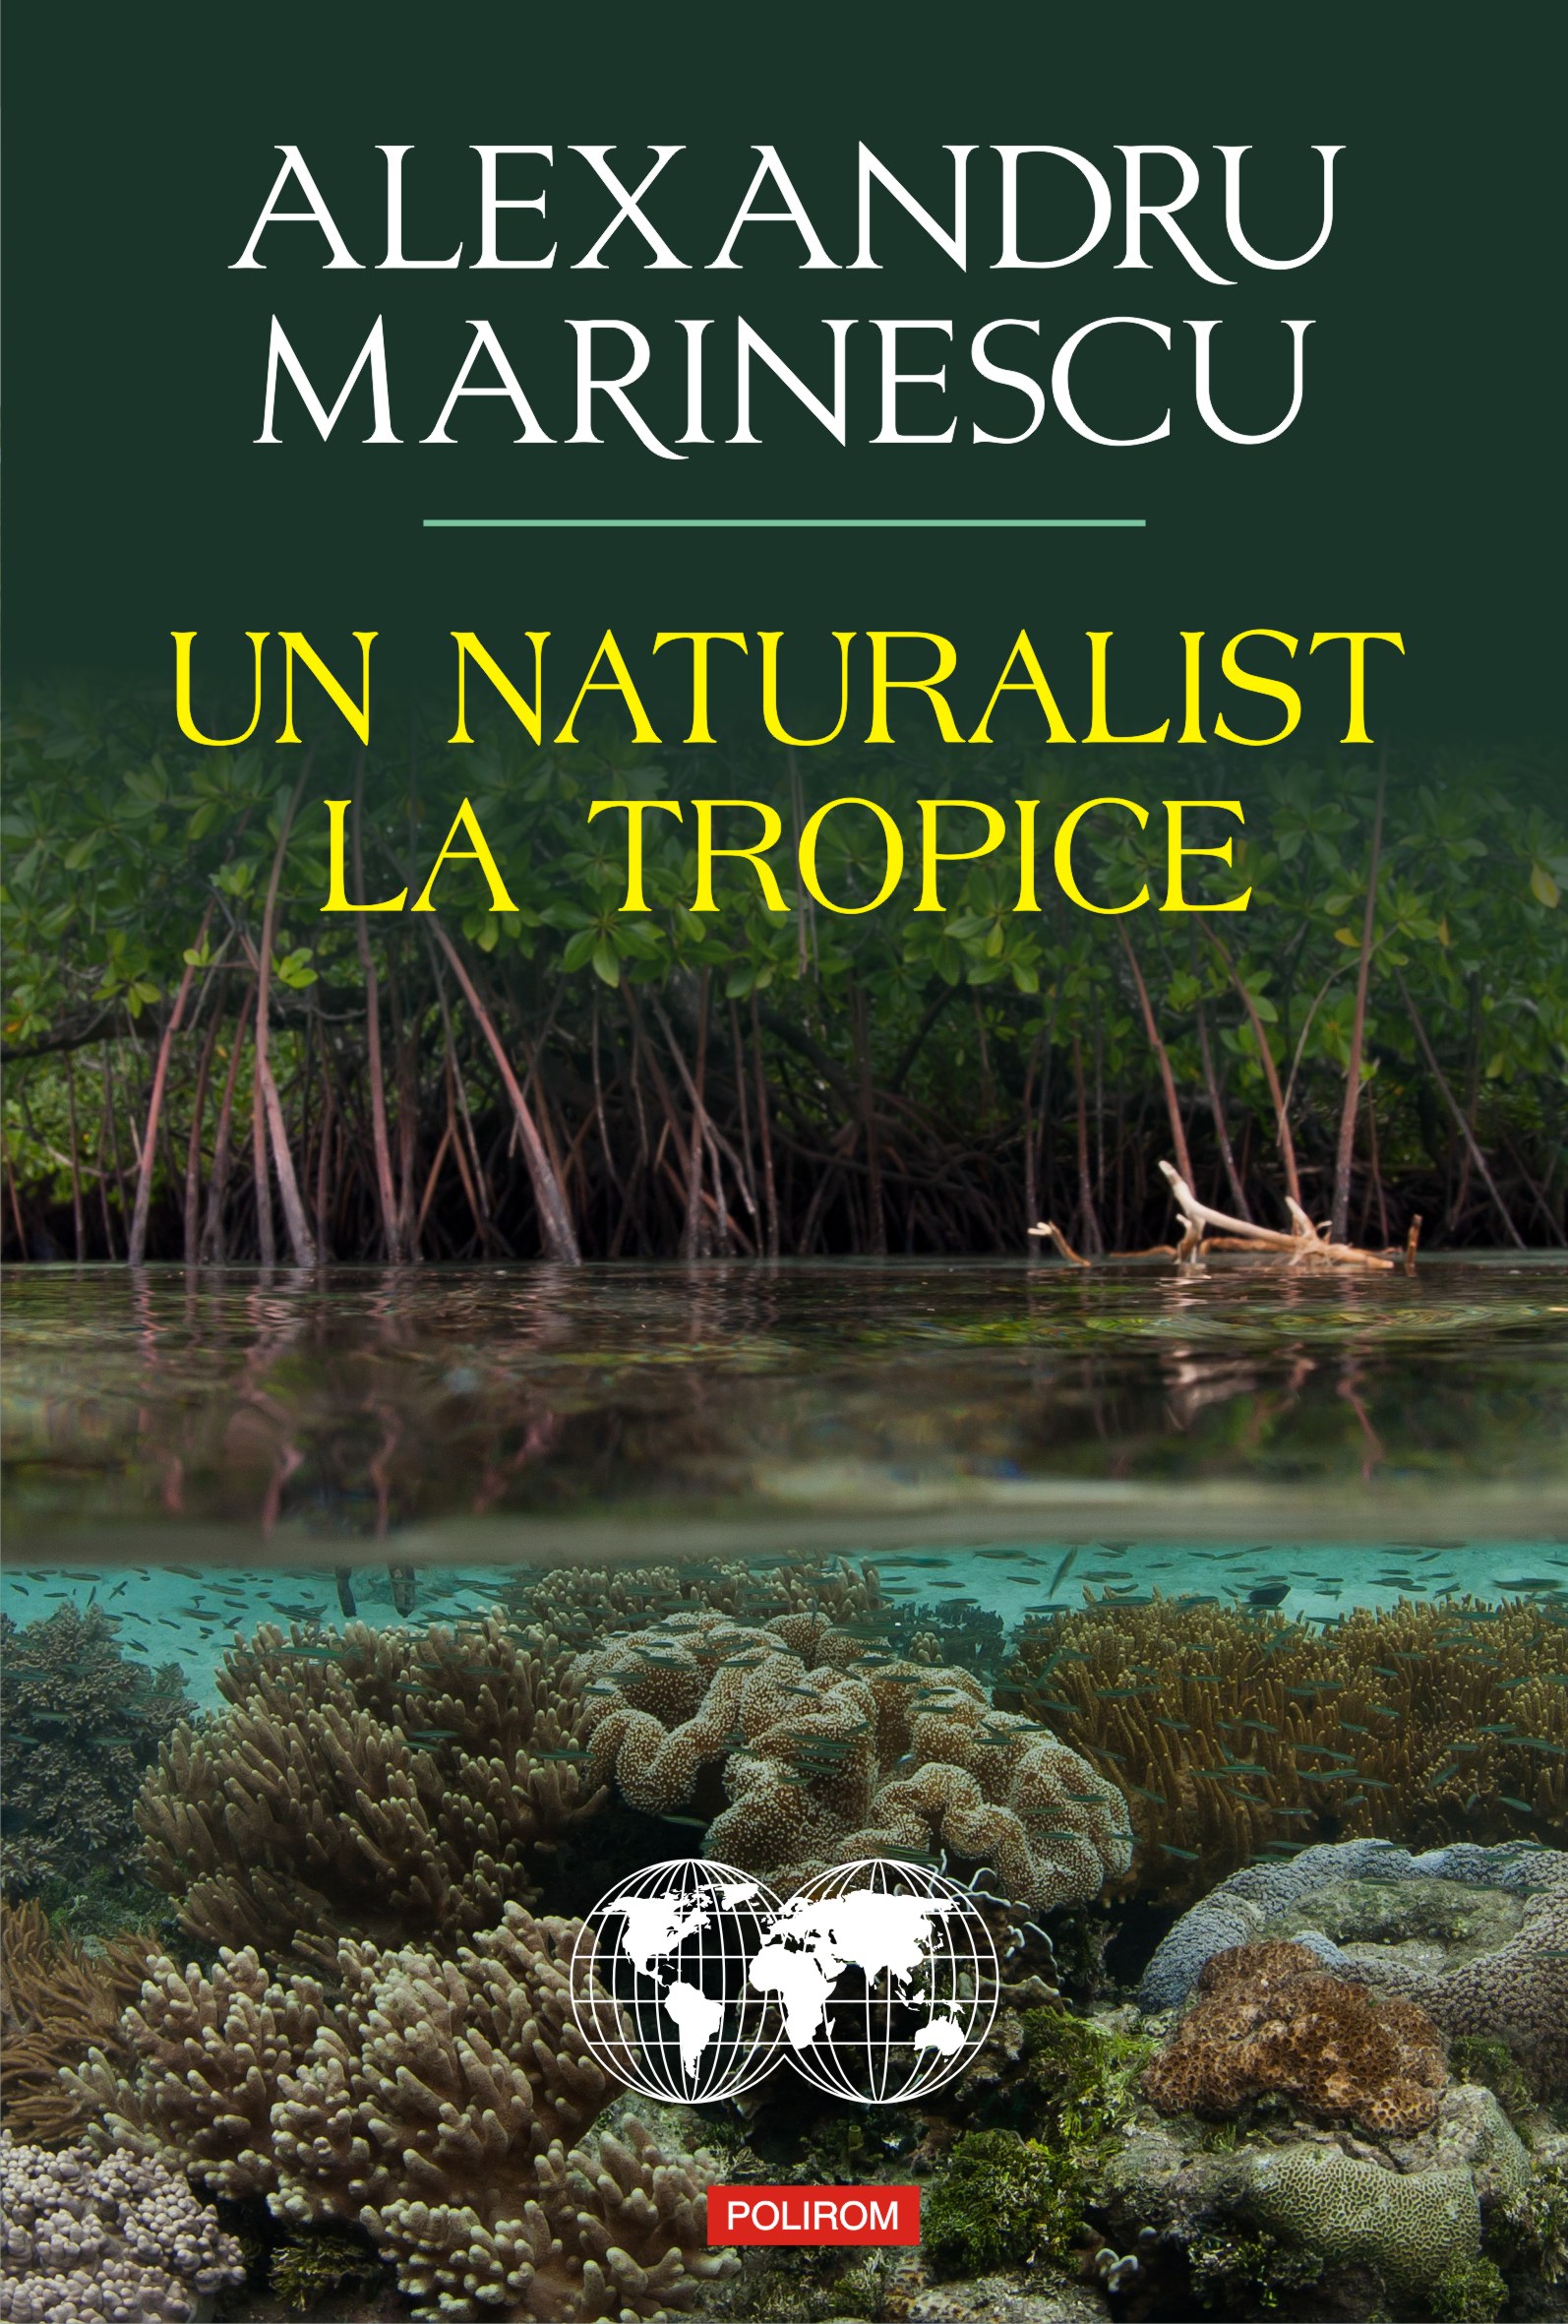 eBook Un naturalist la tropice - Alexandru Marinescu